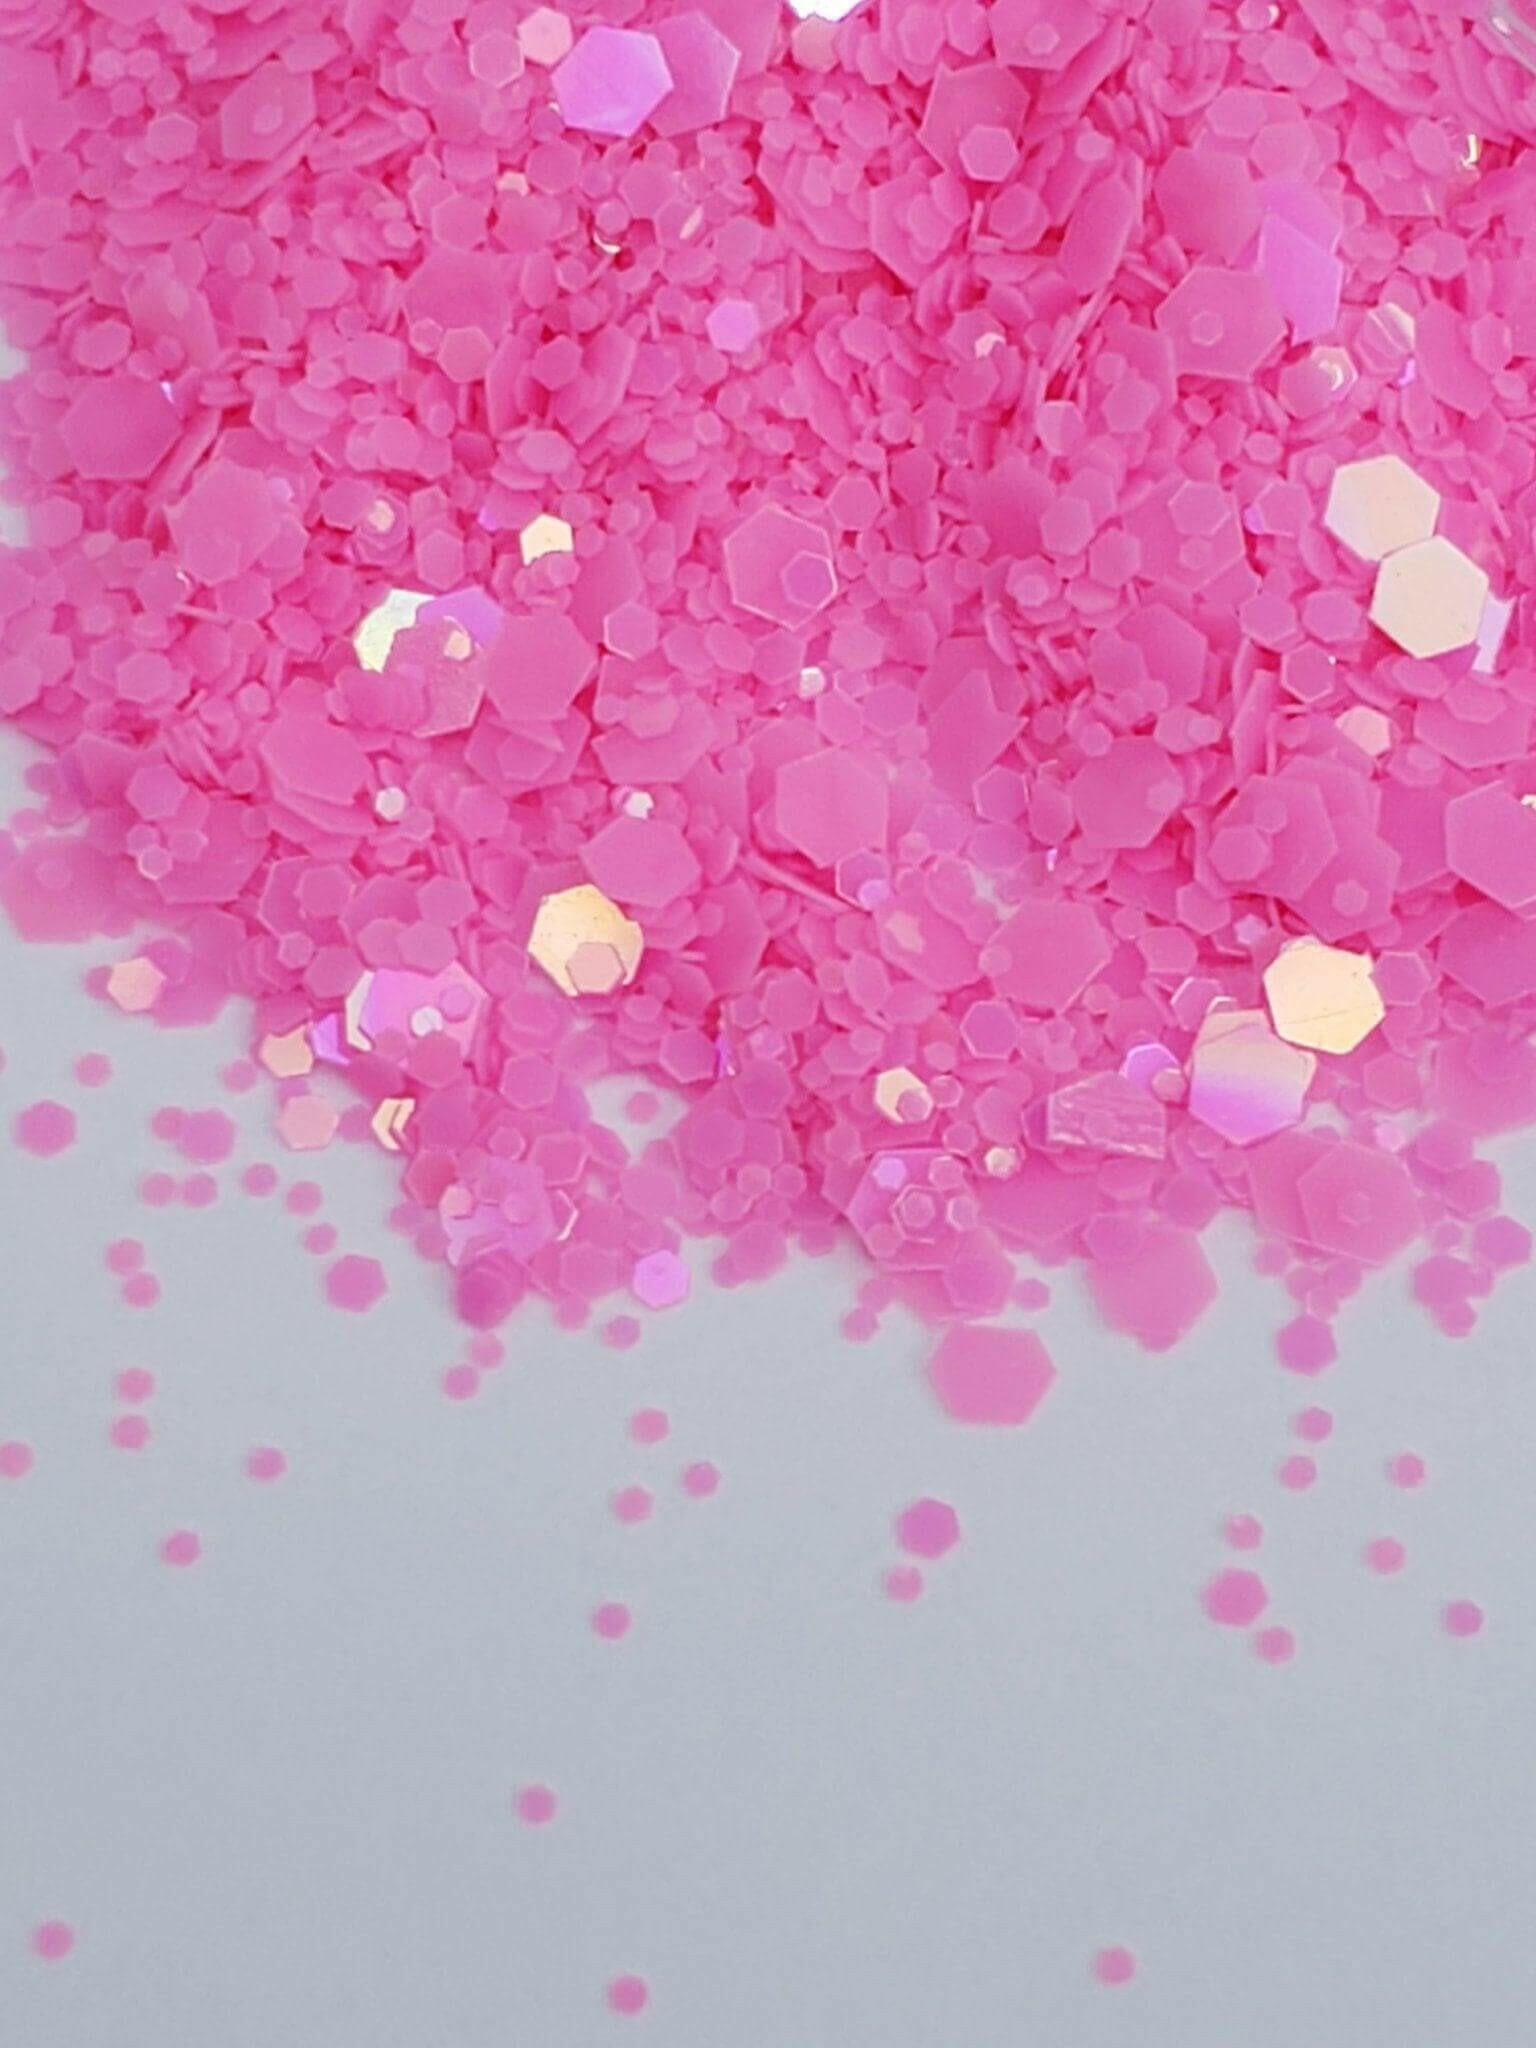 Pink Tank, Glitter (189) - thePINKchair.ca - Glitter - thePINKchair nail studio